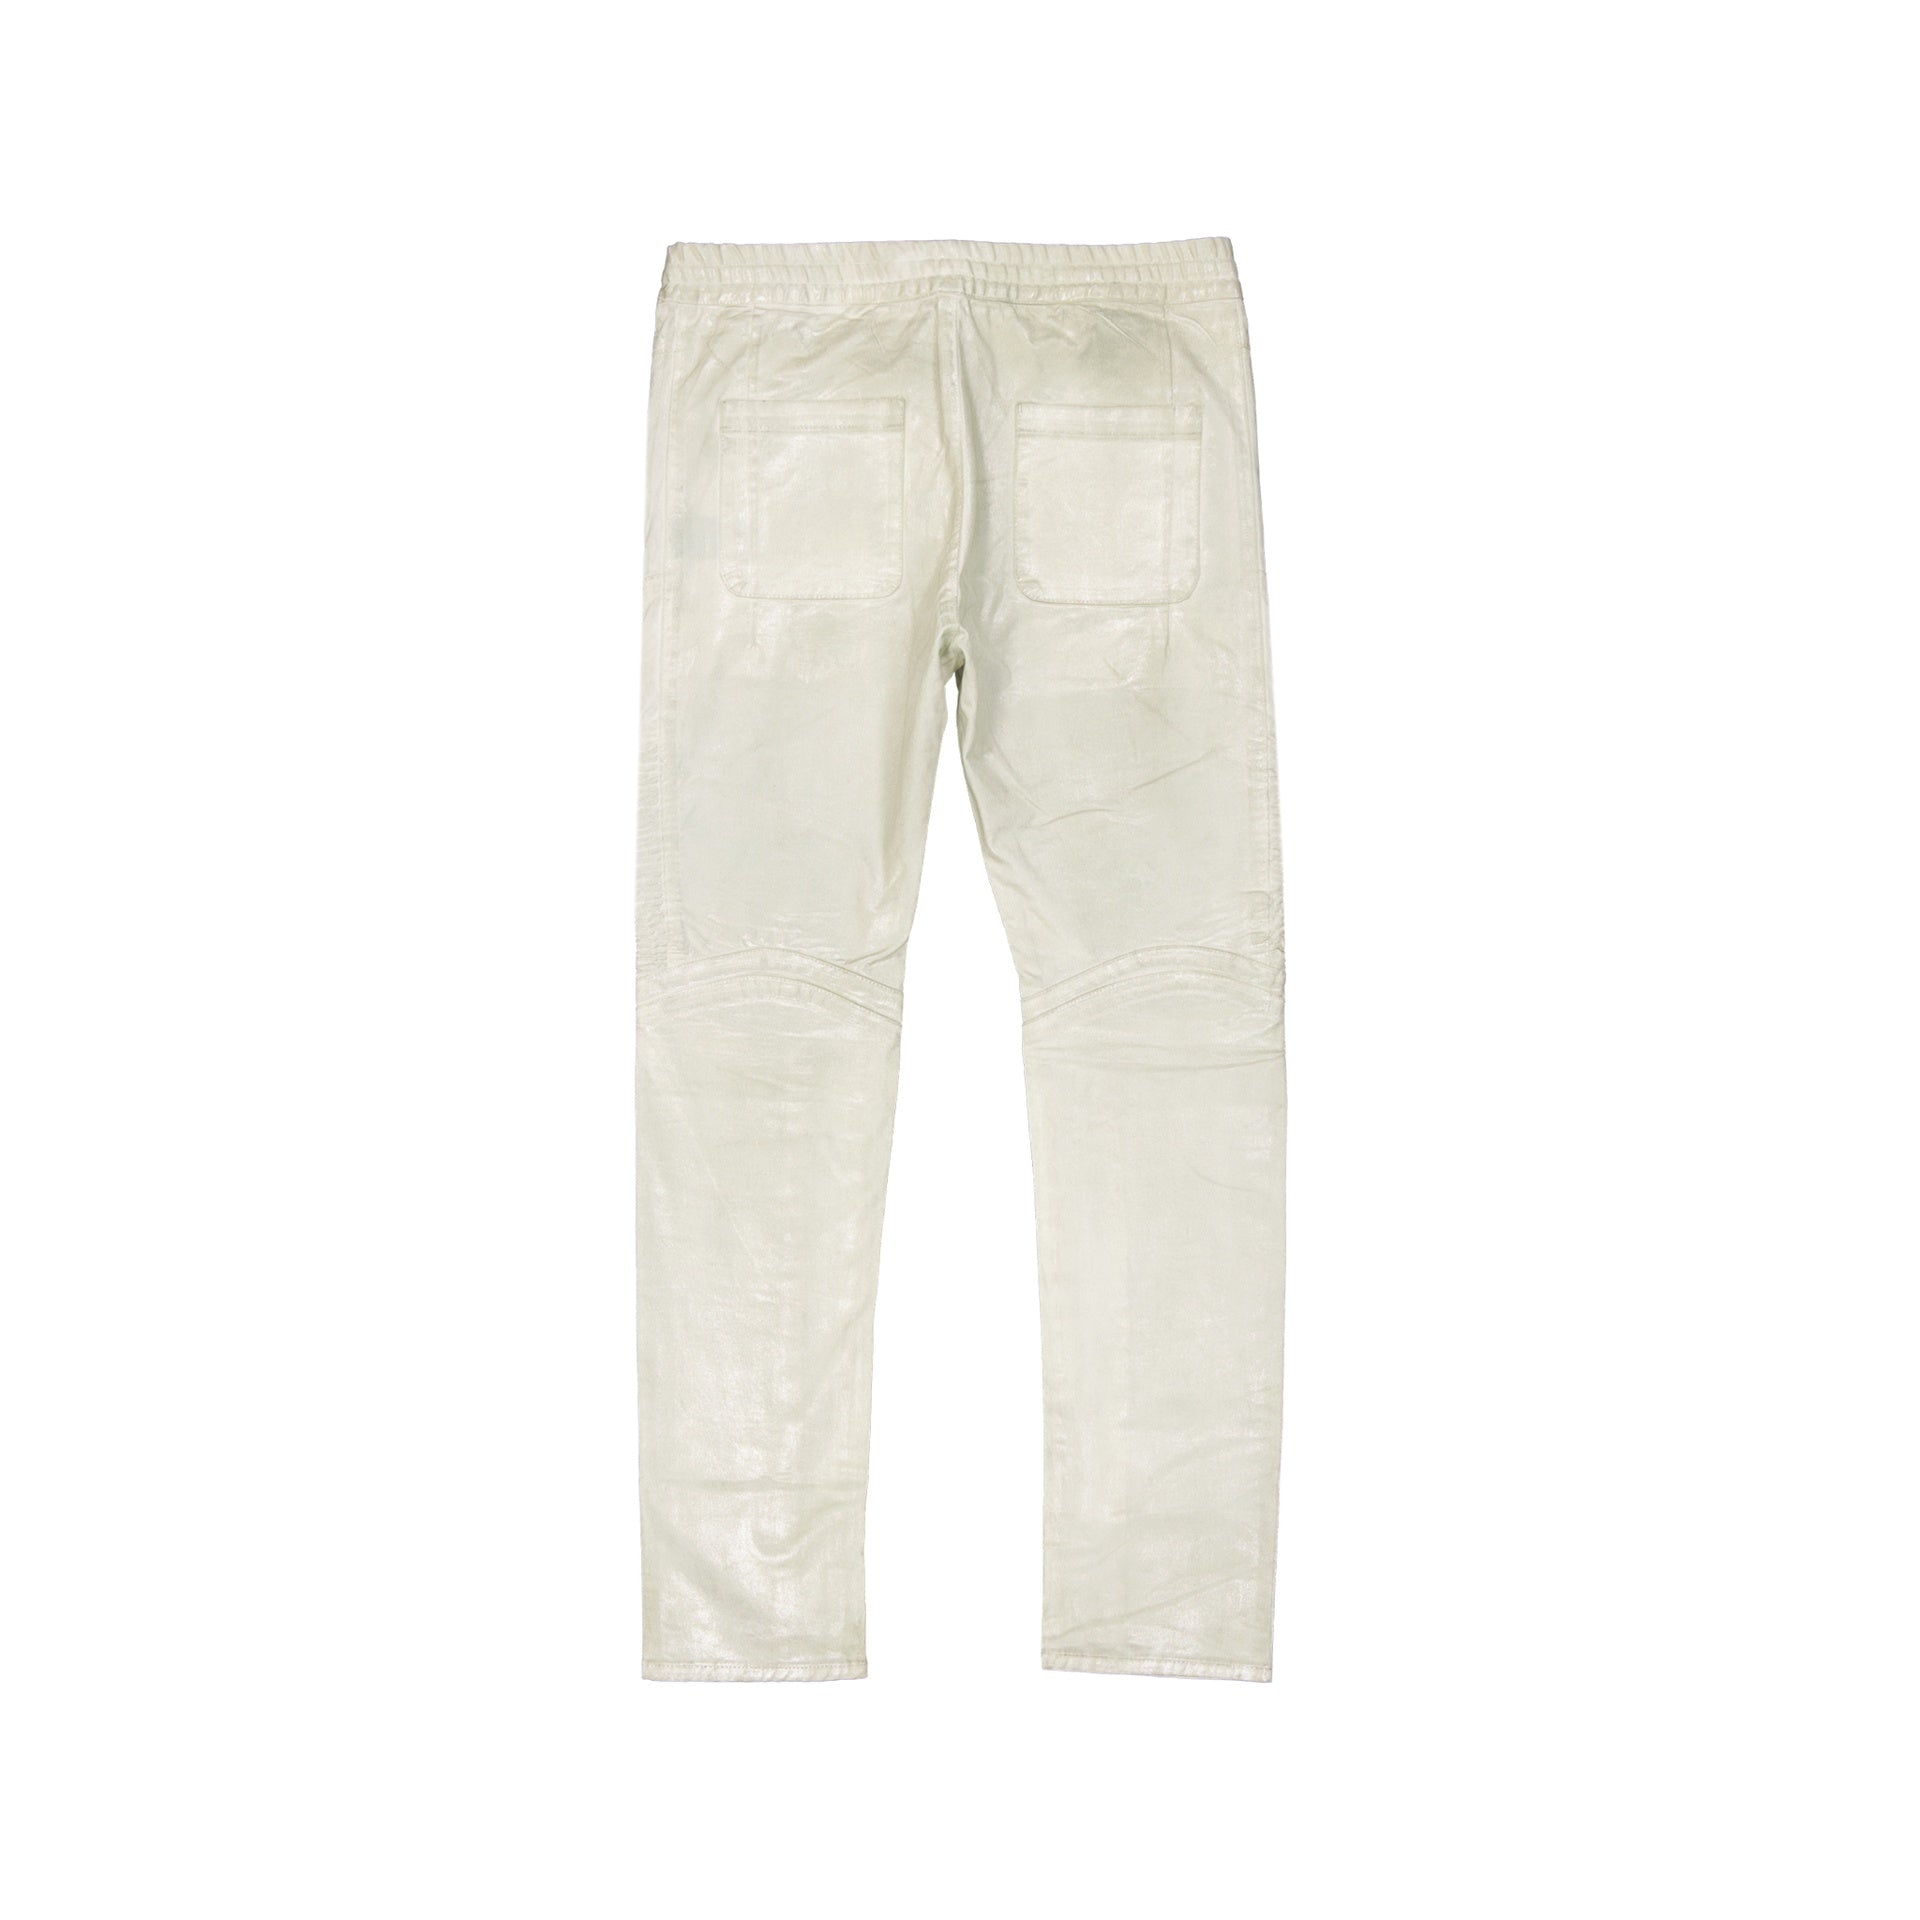 BALMAIN-OUTLET-SALE-Balmain-Cotton-Glitter-Pants-Hosen-WHITE-M-ARCHIVE-COLLECTION-2.jpg